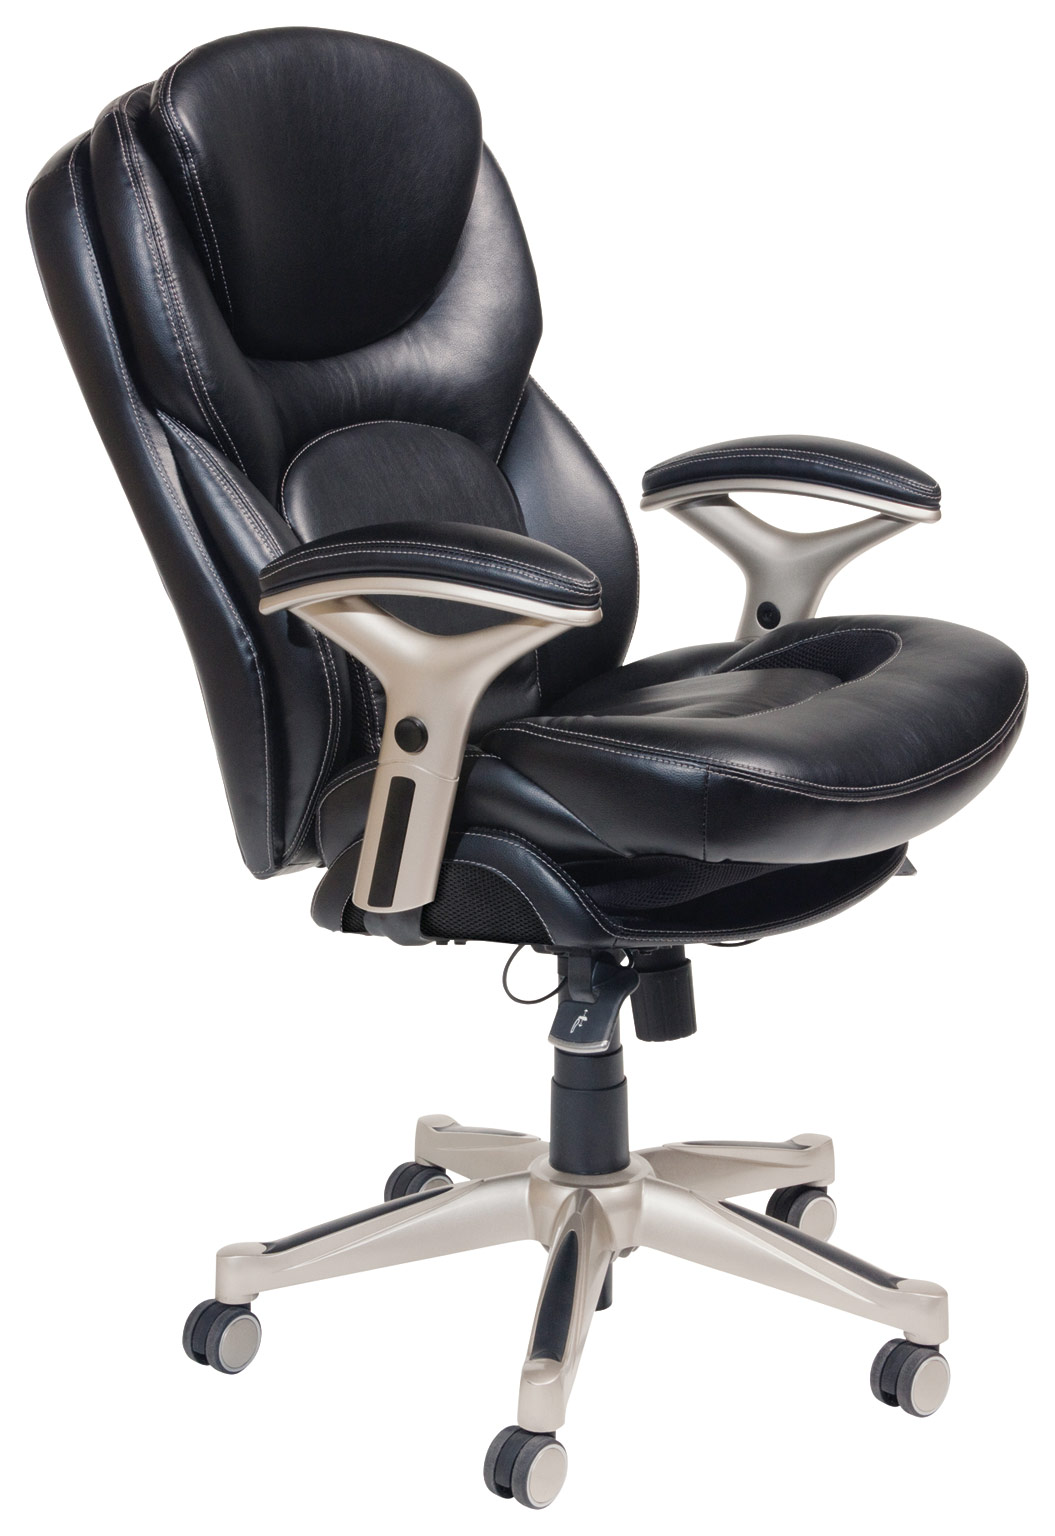 Angle View: Serta - Works Fabric Executive Chair - Dark Gray